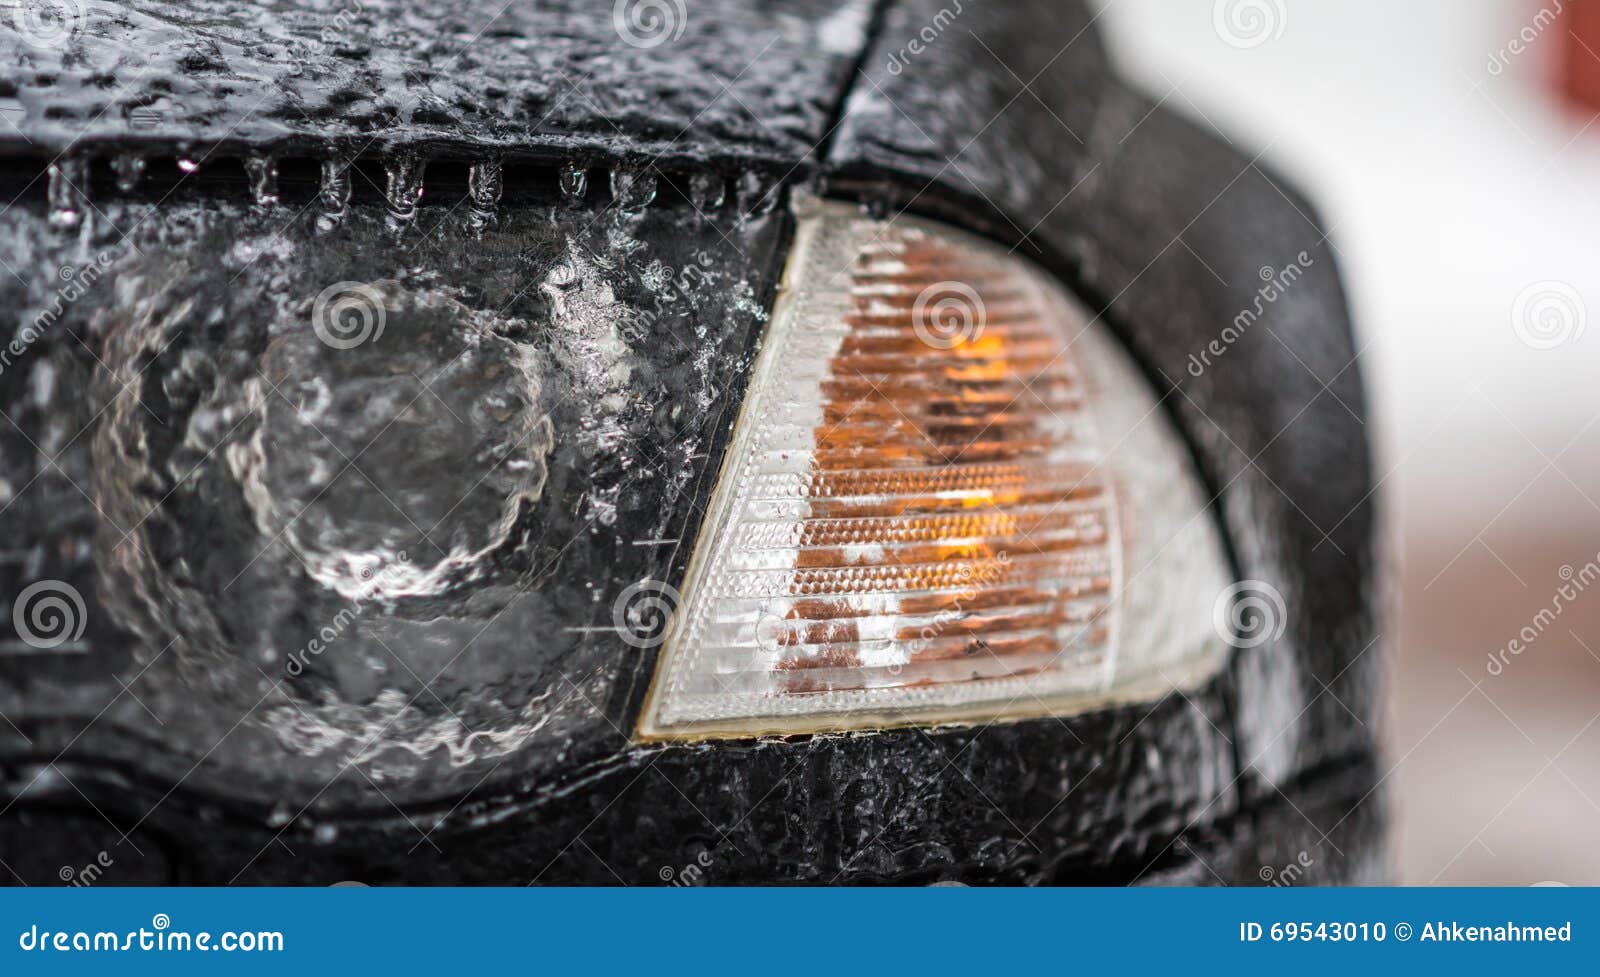 freezing rain ice coated car. headlight and signal light on black car covered in freezing rain. bad driving weather.